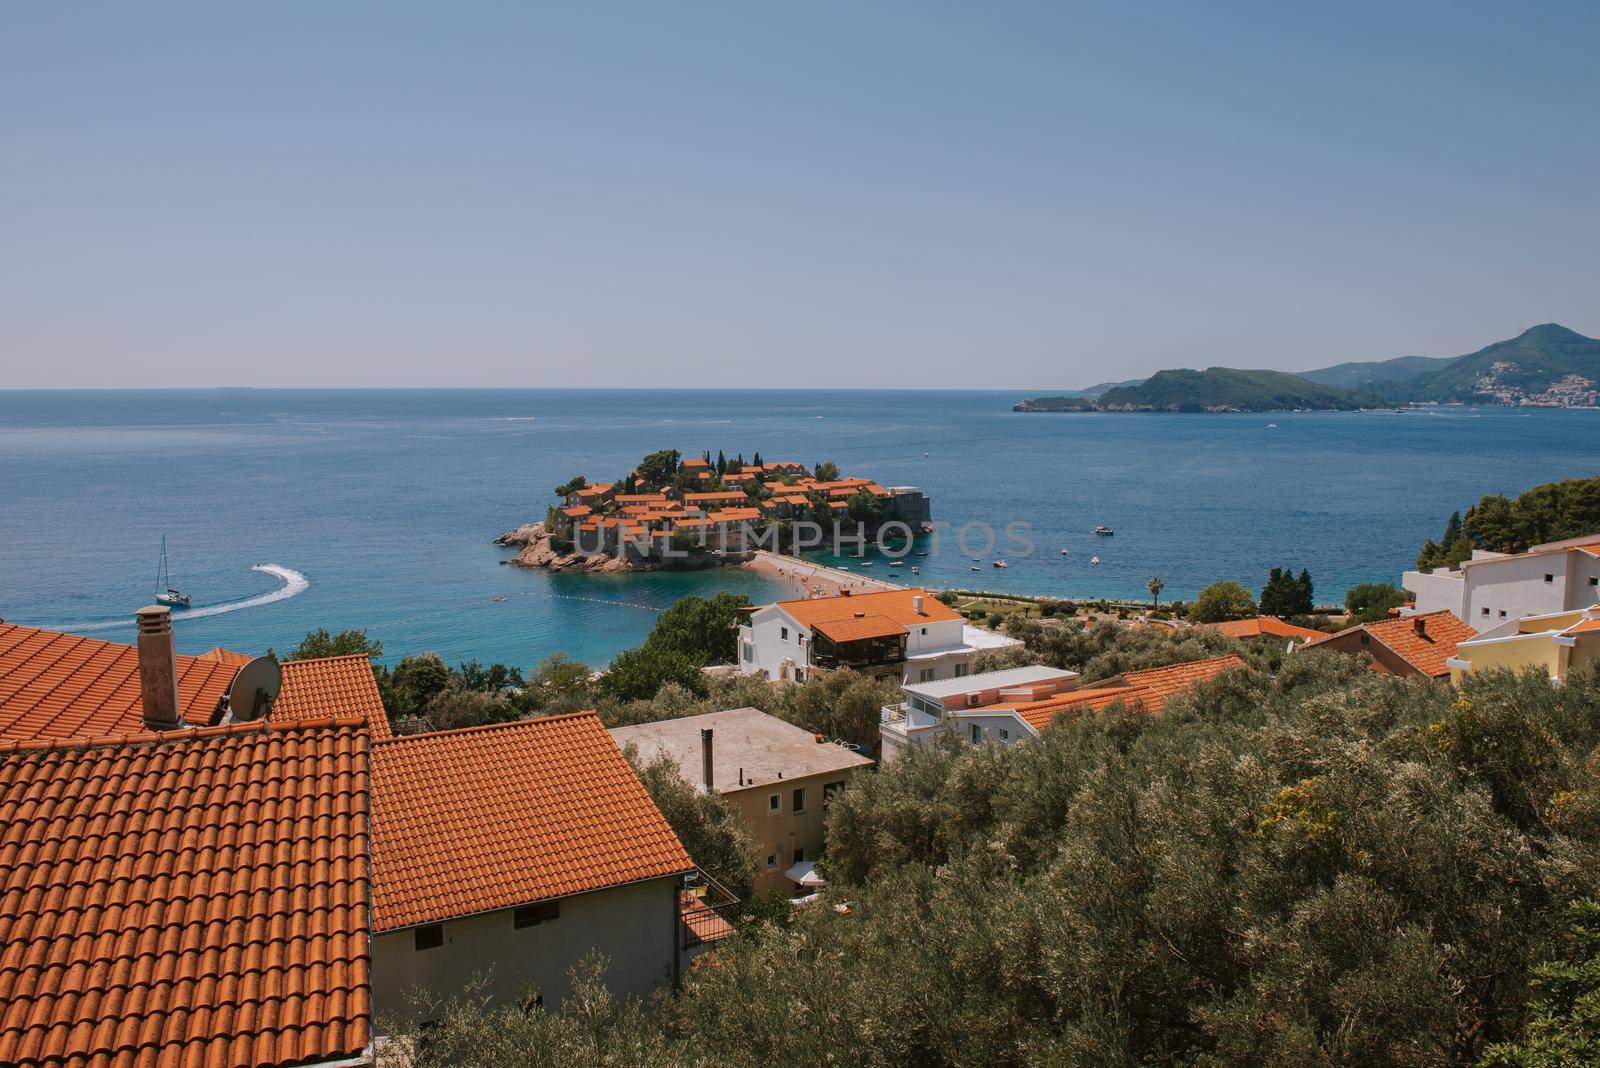 Sveti Stefan is a small island on Adriatic coast of Montenegro near of Budva. Resort is known commercially as Aman Sveti Stefan. Sveti Stefan peninsula on the Adriatic Sea in Budva, Montenegro, Europe by Andrii_Ko